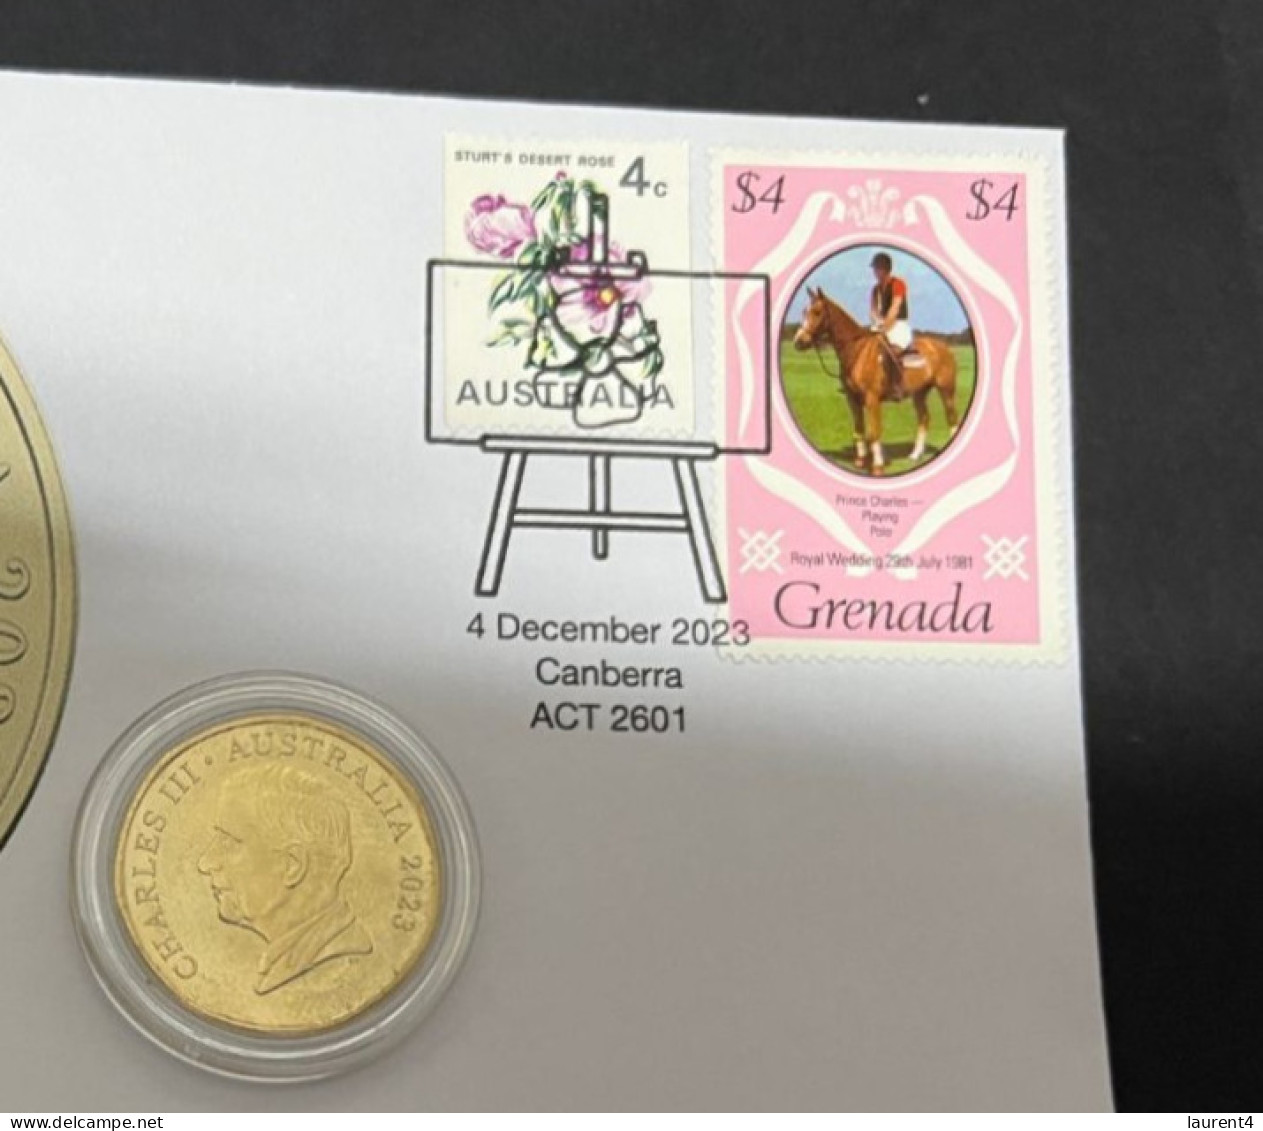 (18-12-2023) (2 W 29A) $ 1.00 King Charles III New $ 1.00 Australian Coin (released 4-12-2023) Prince Charles Grenada - Dollar